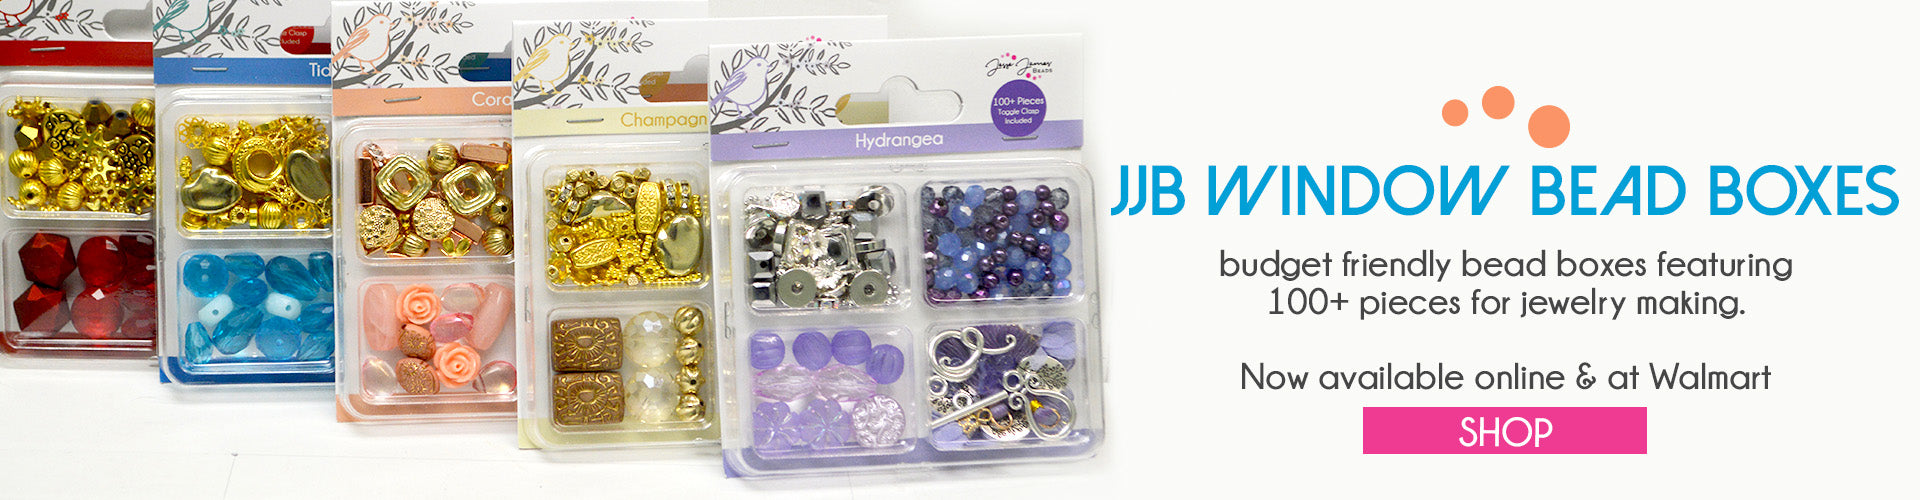 Focal Bead Grab Bag 4pc – Jesse James Beads